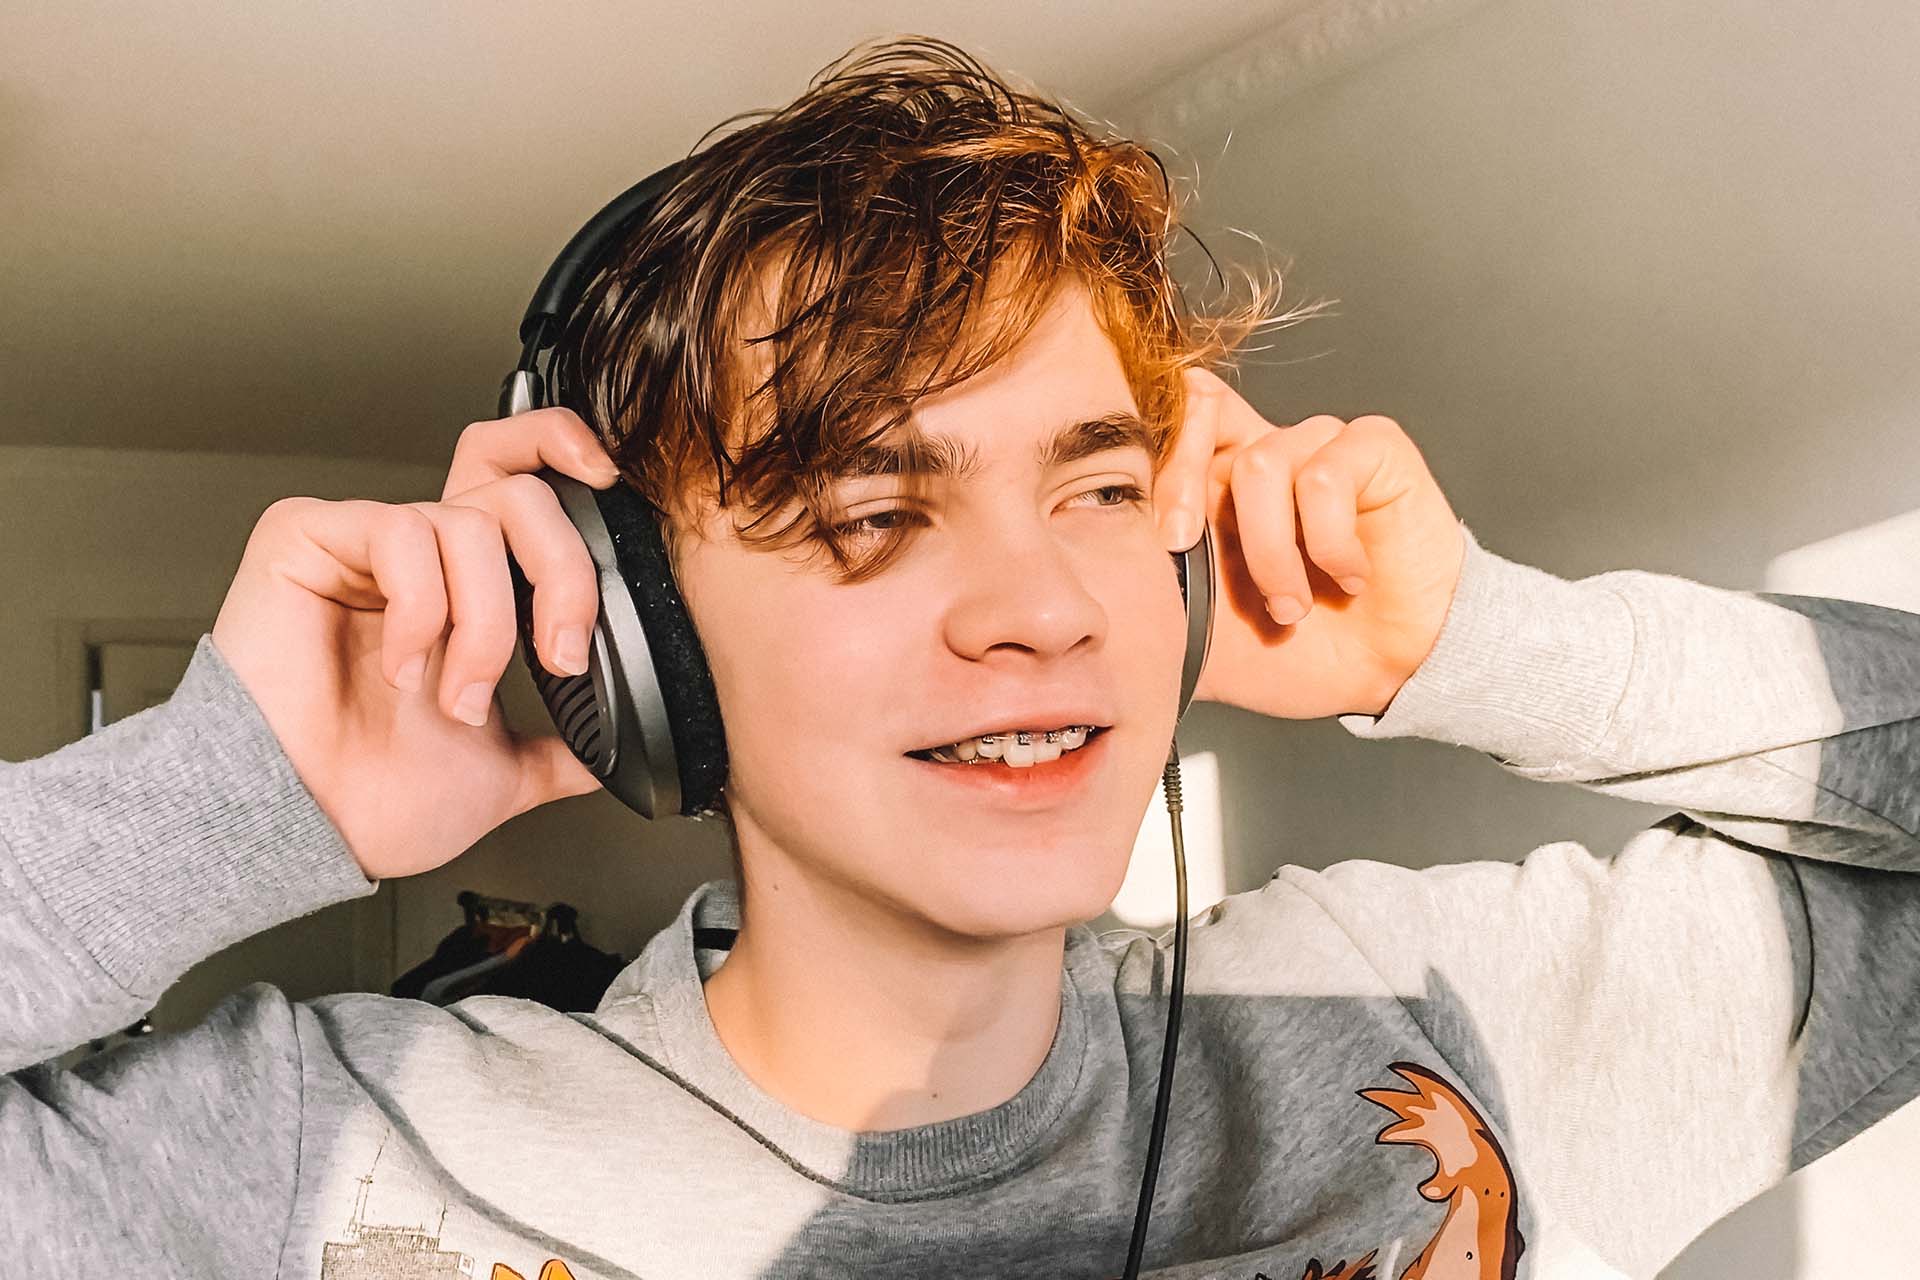 Teen boy with braces listens to music on headphones in Toluca Lake, Los Angeles, CA